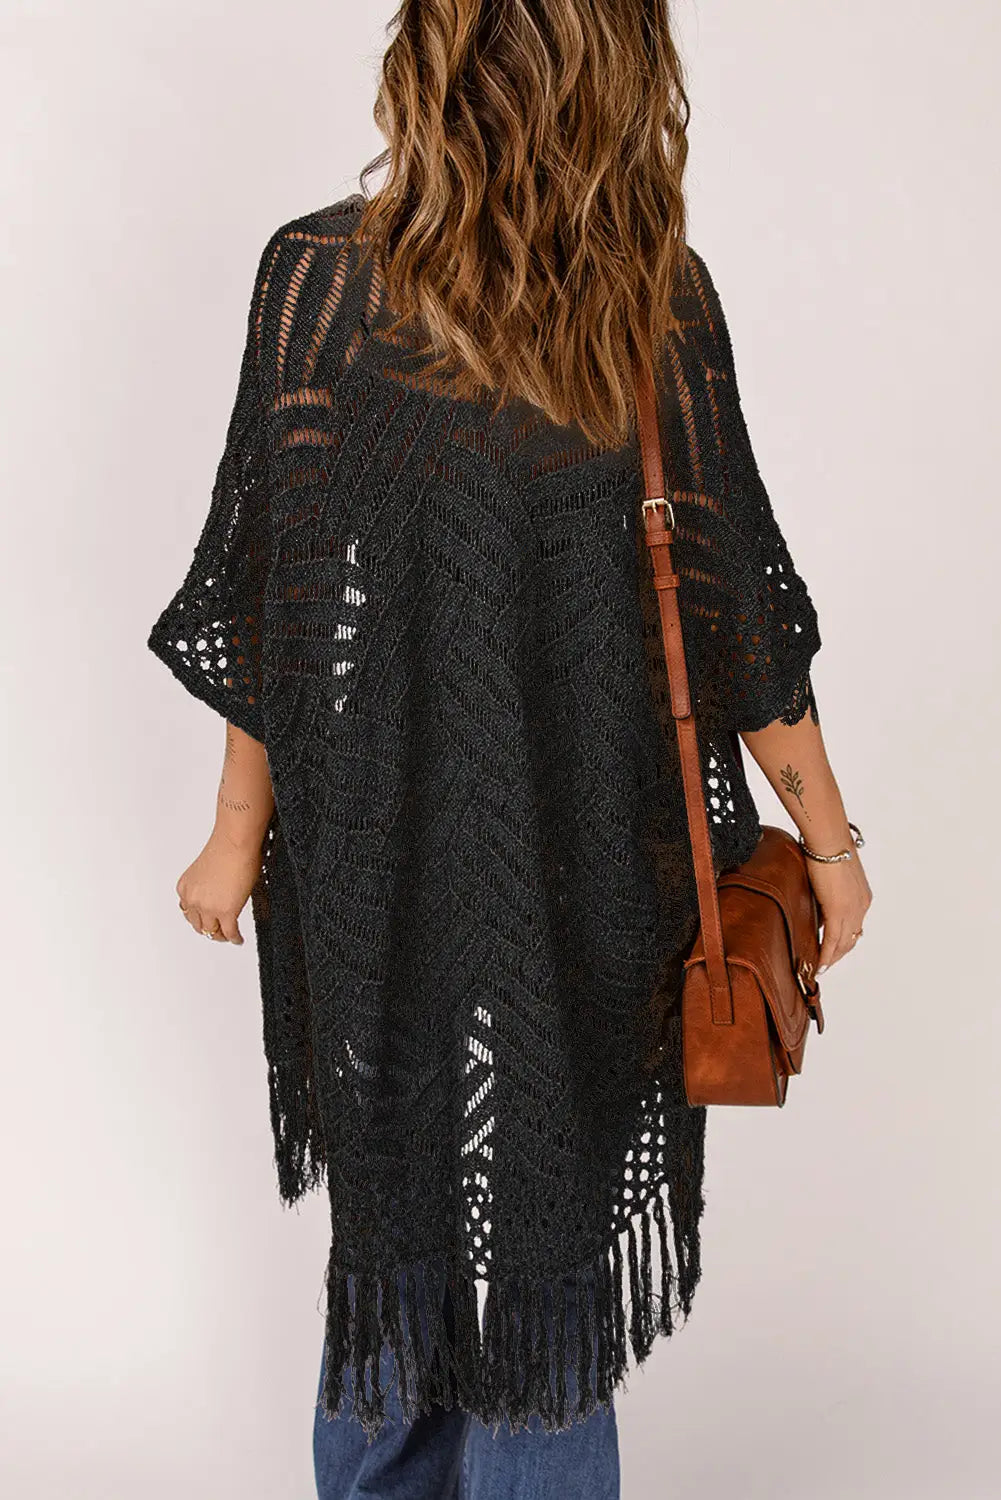 Black loose knitwear kimono with slits - one size / 75% acrylic + 25% polyamide - kimonos